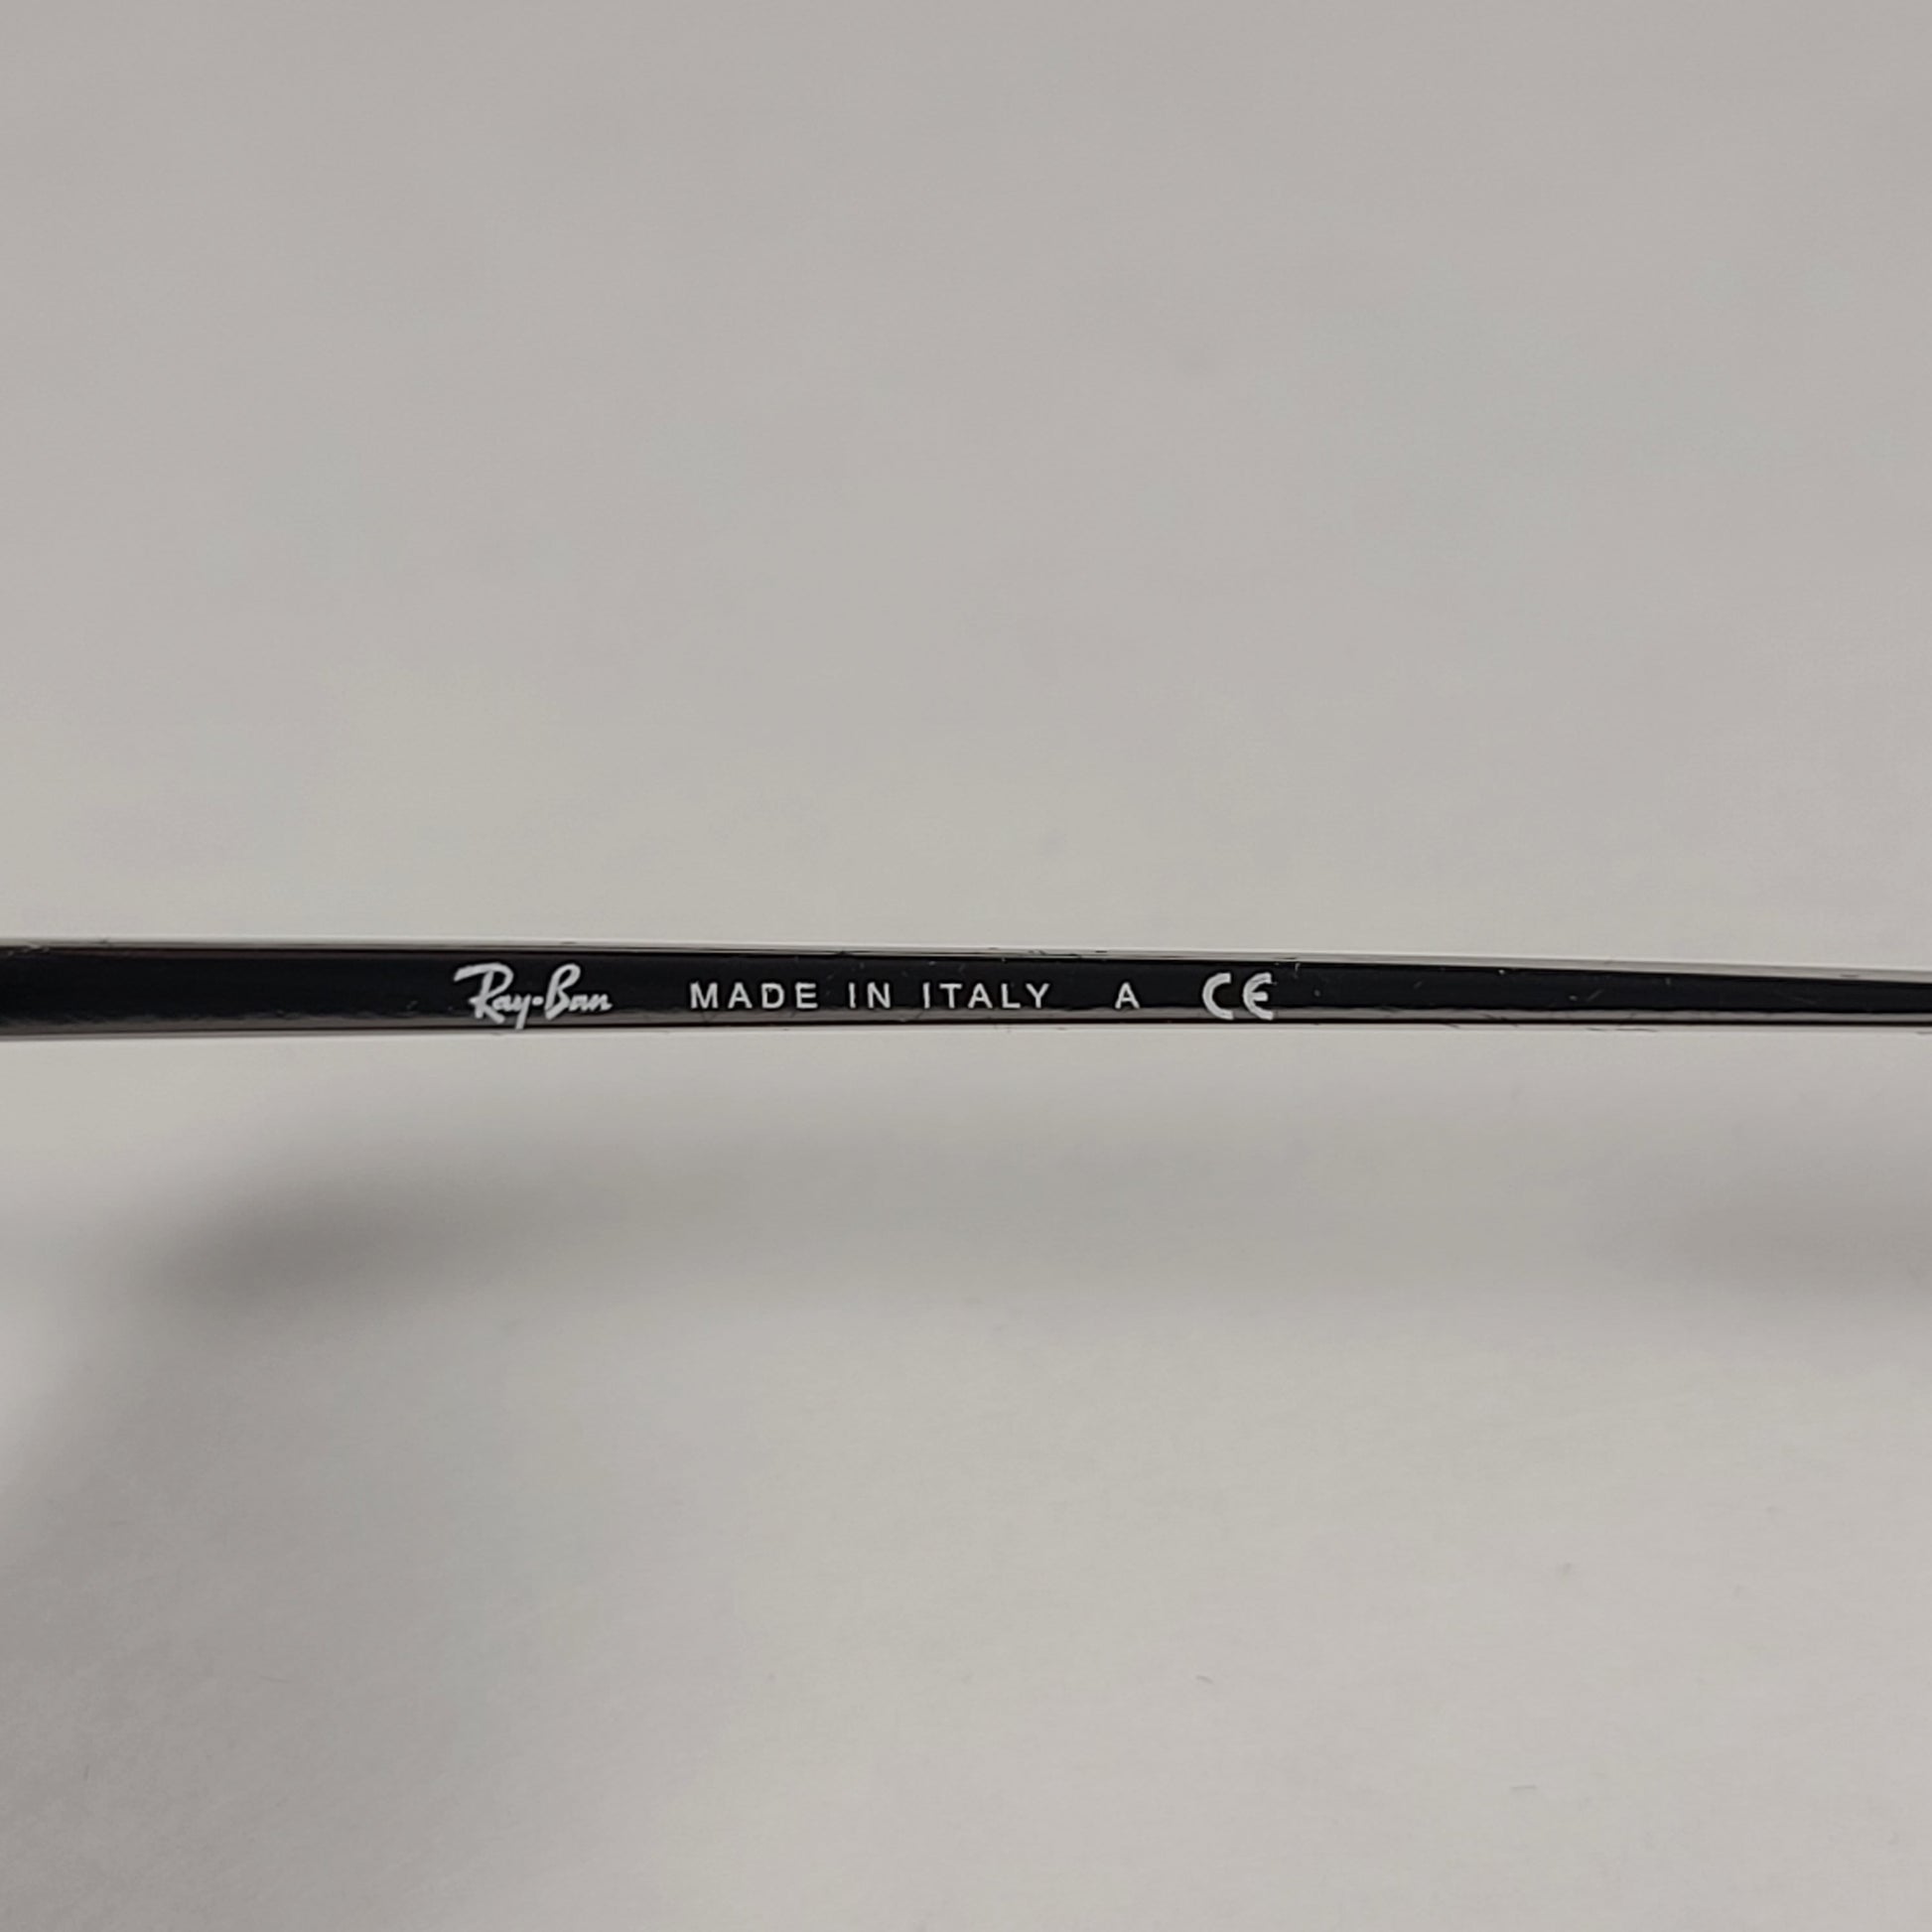 Ray-Ban Blaze Round Sunglasses Black Silver Metal Frame Gray Lens RB3574N 003/87 - Sunglasses